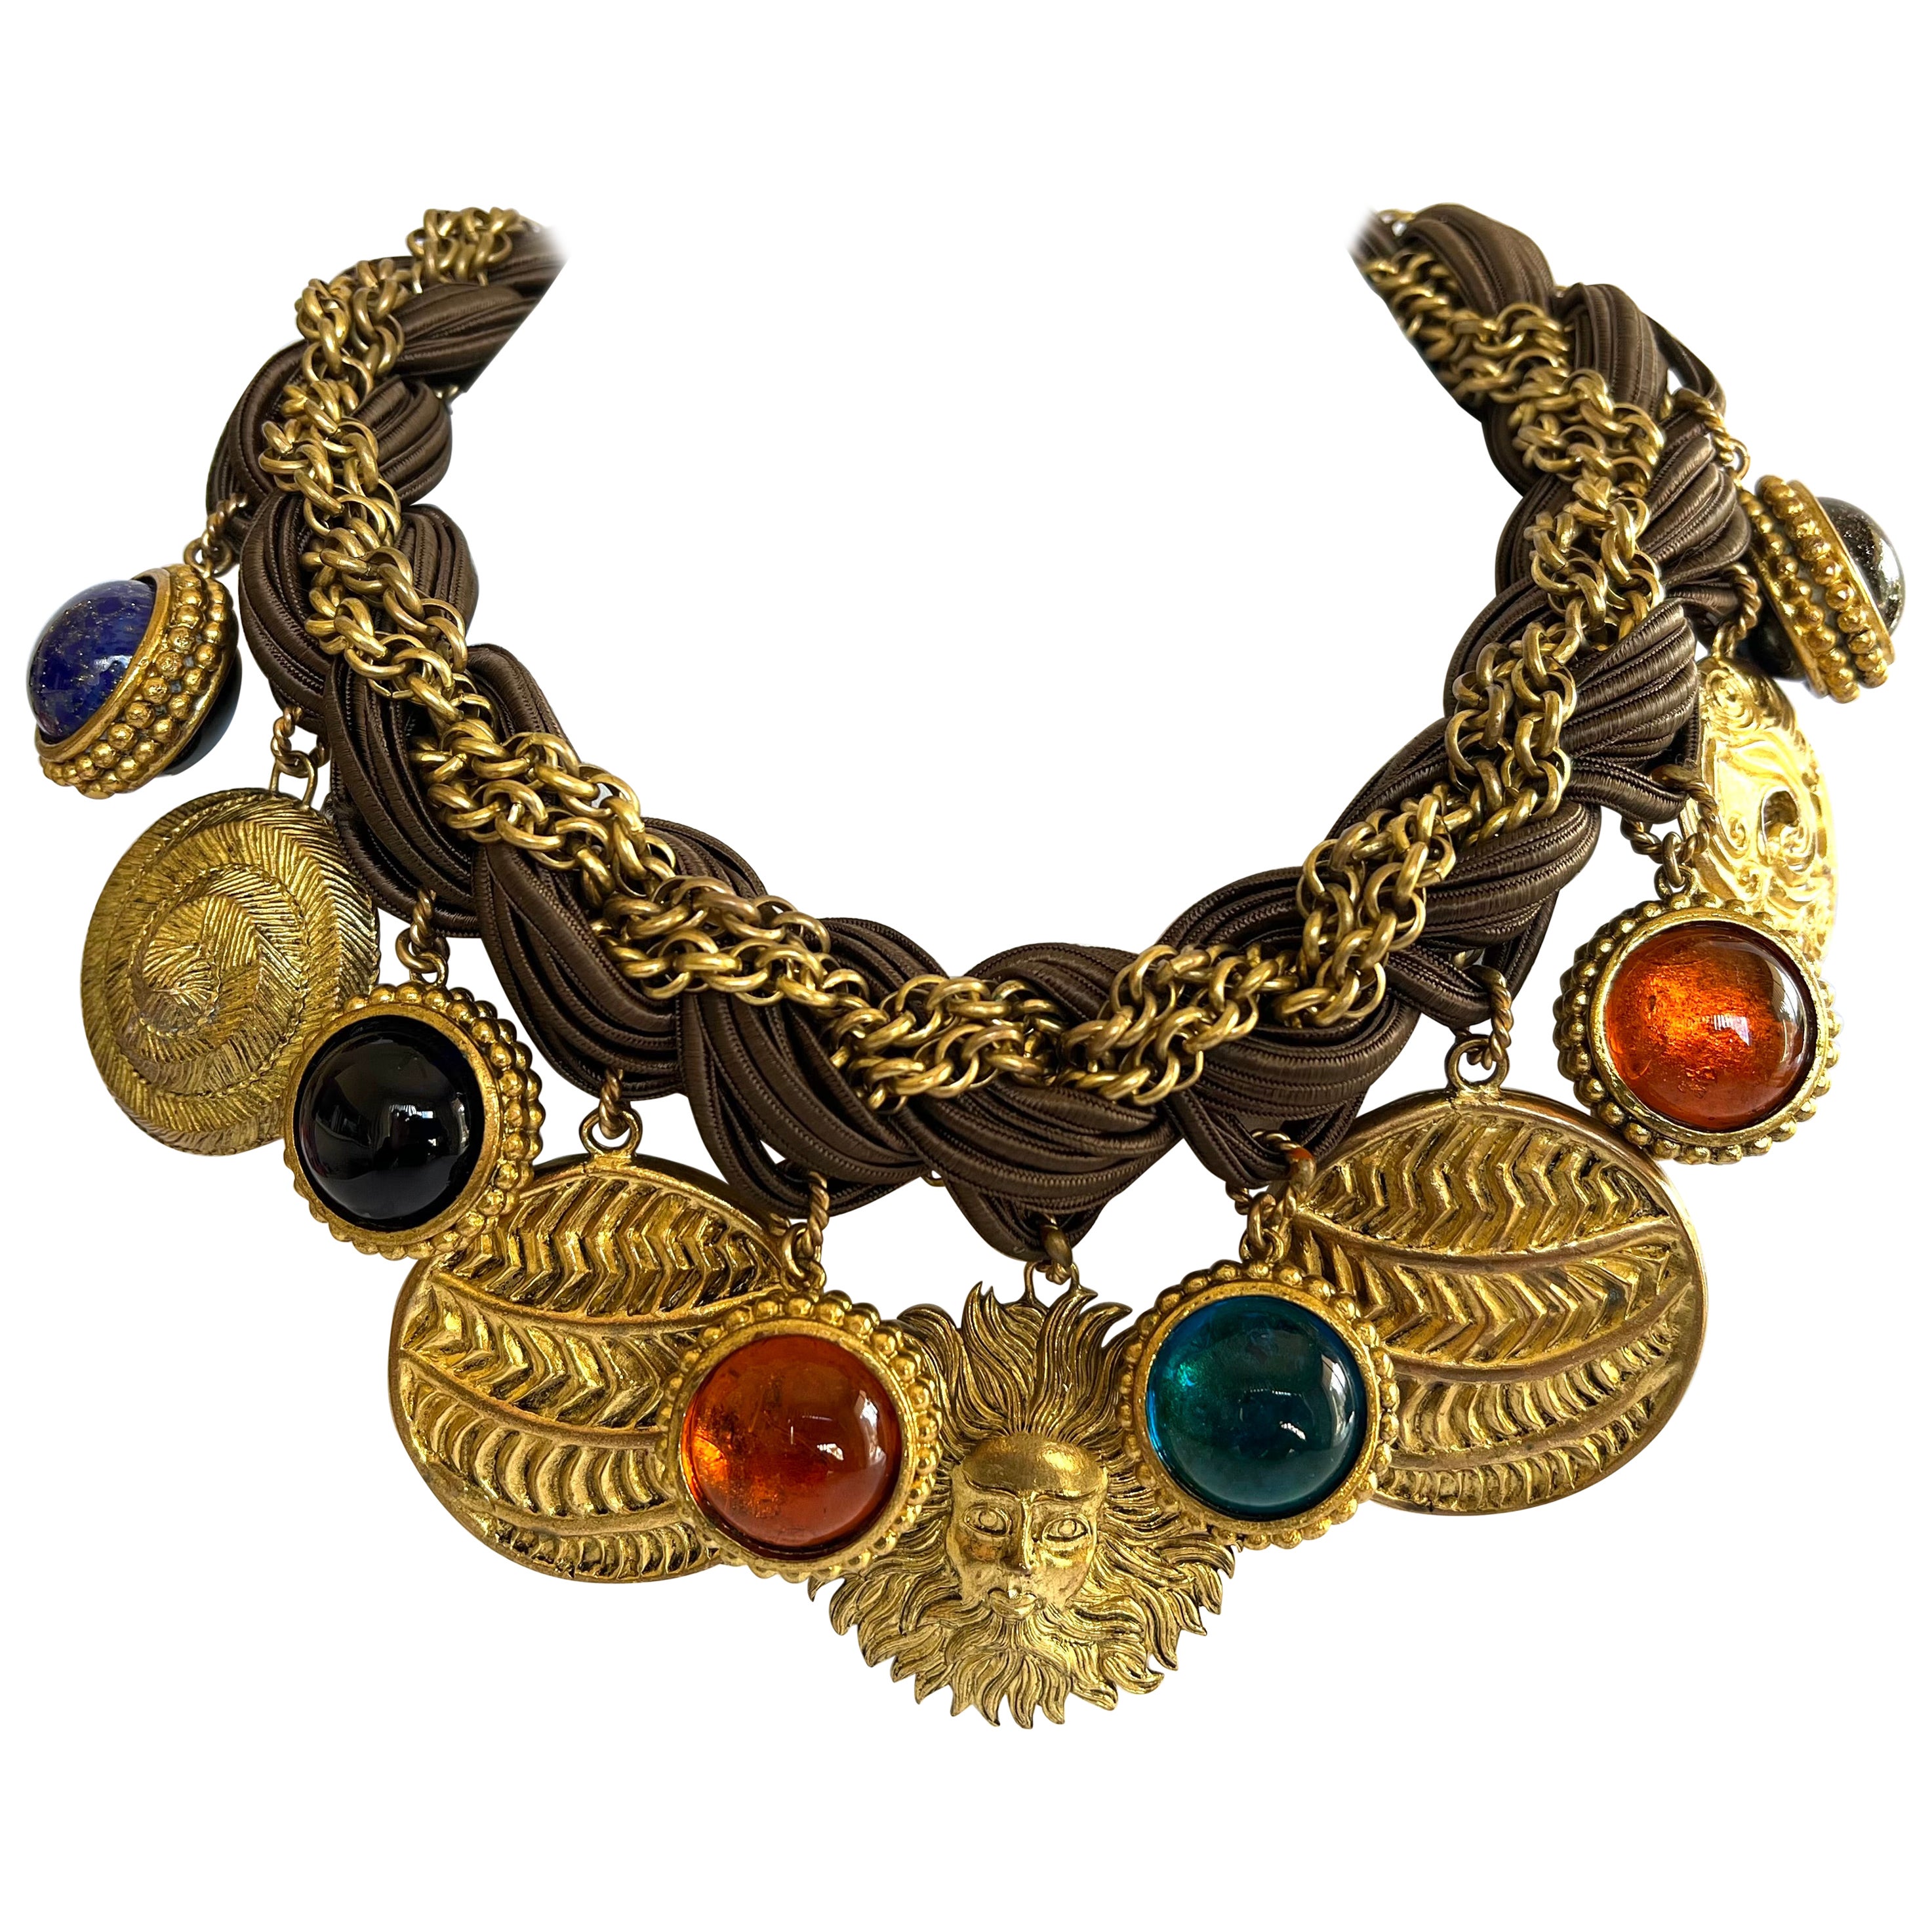 Isabel Canovas Vintage Gilt Charm Necklace 